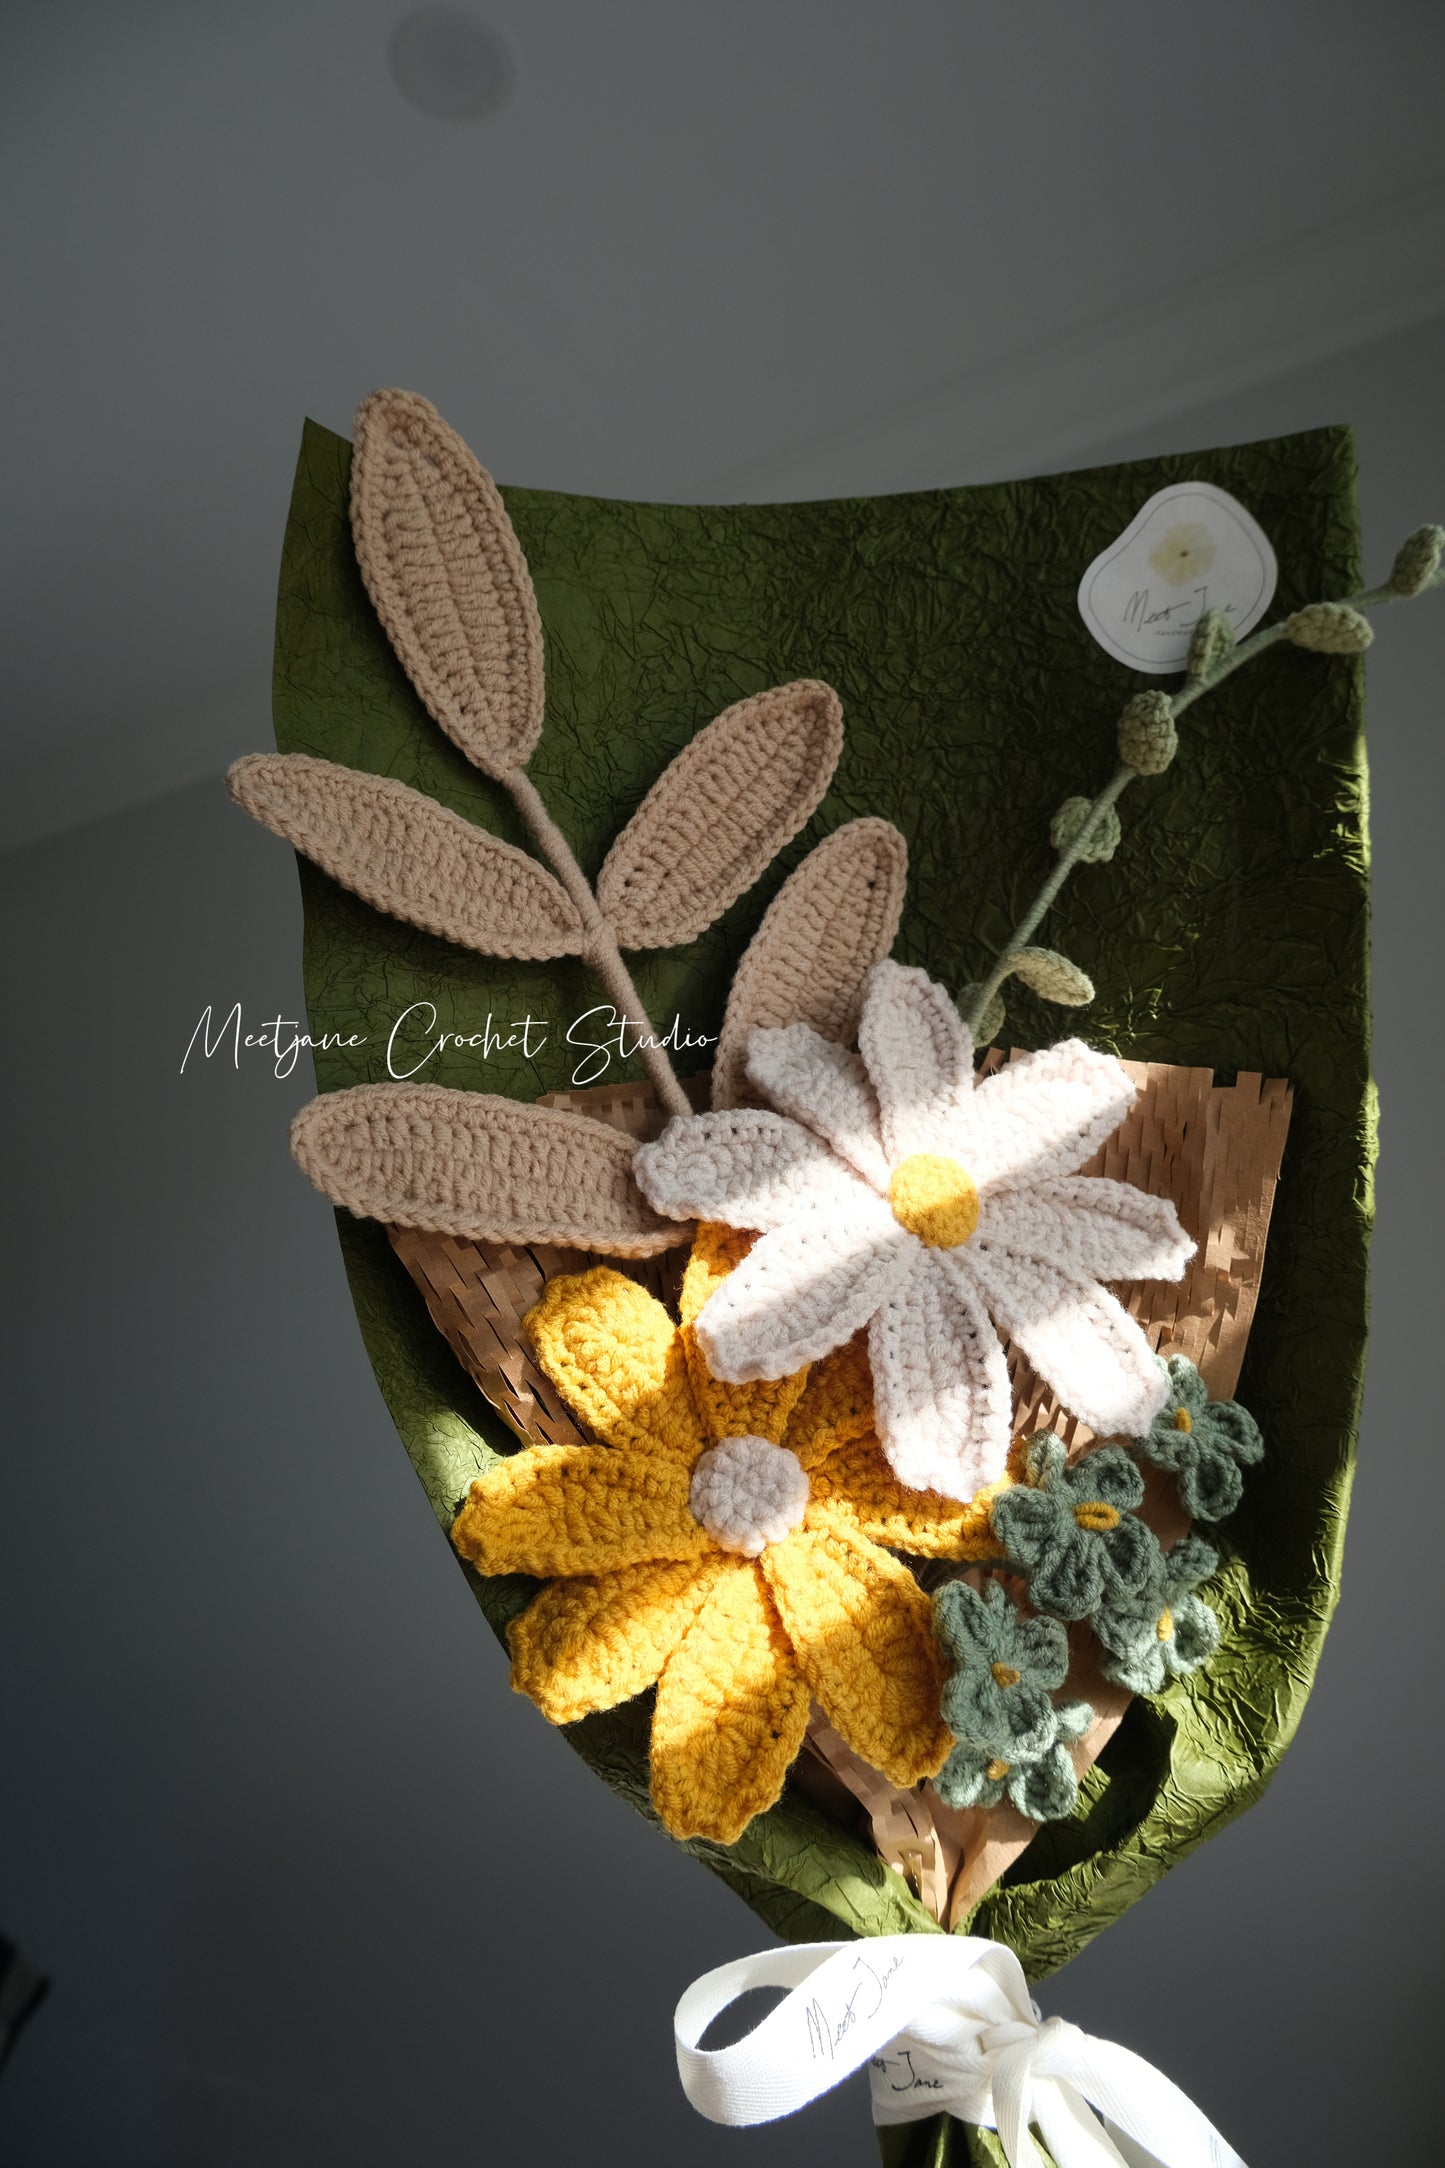 Crochet Workshop|Crochet flowers|Beginner friendly【4 sessions】